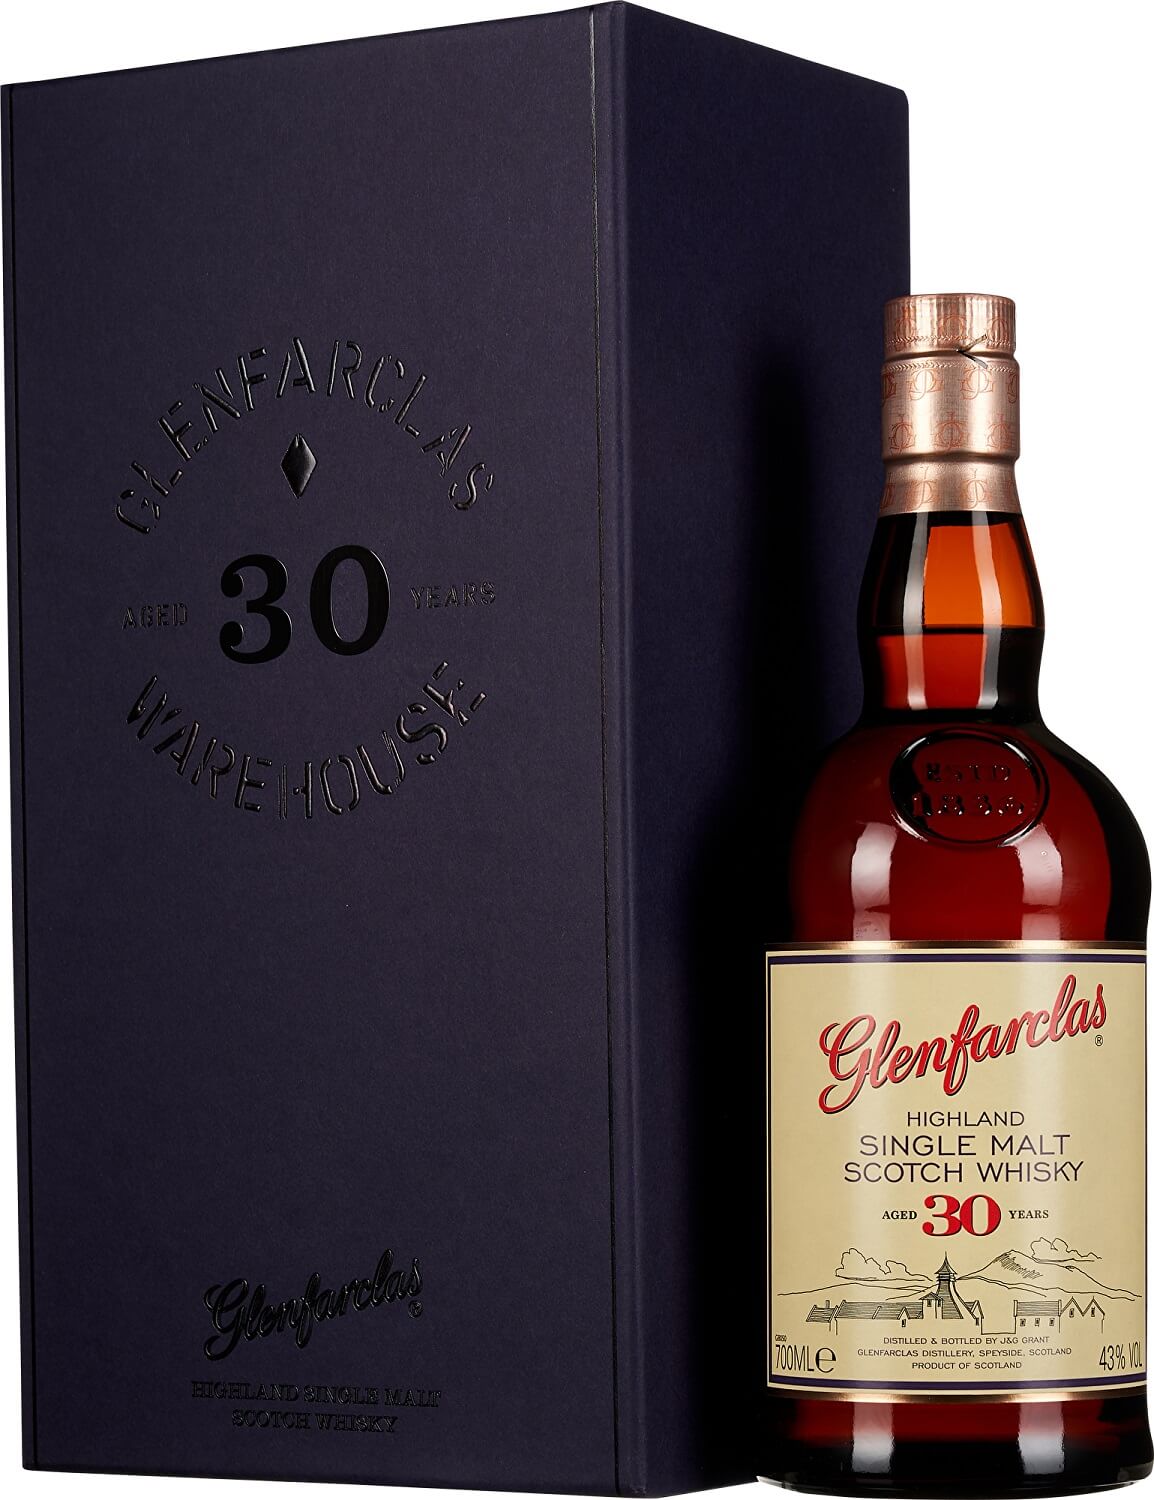 30 Edition Jahre Scotch Warehouse Whisky Glenfarclas 43% Vol. Malt Highland Single